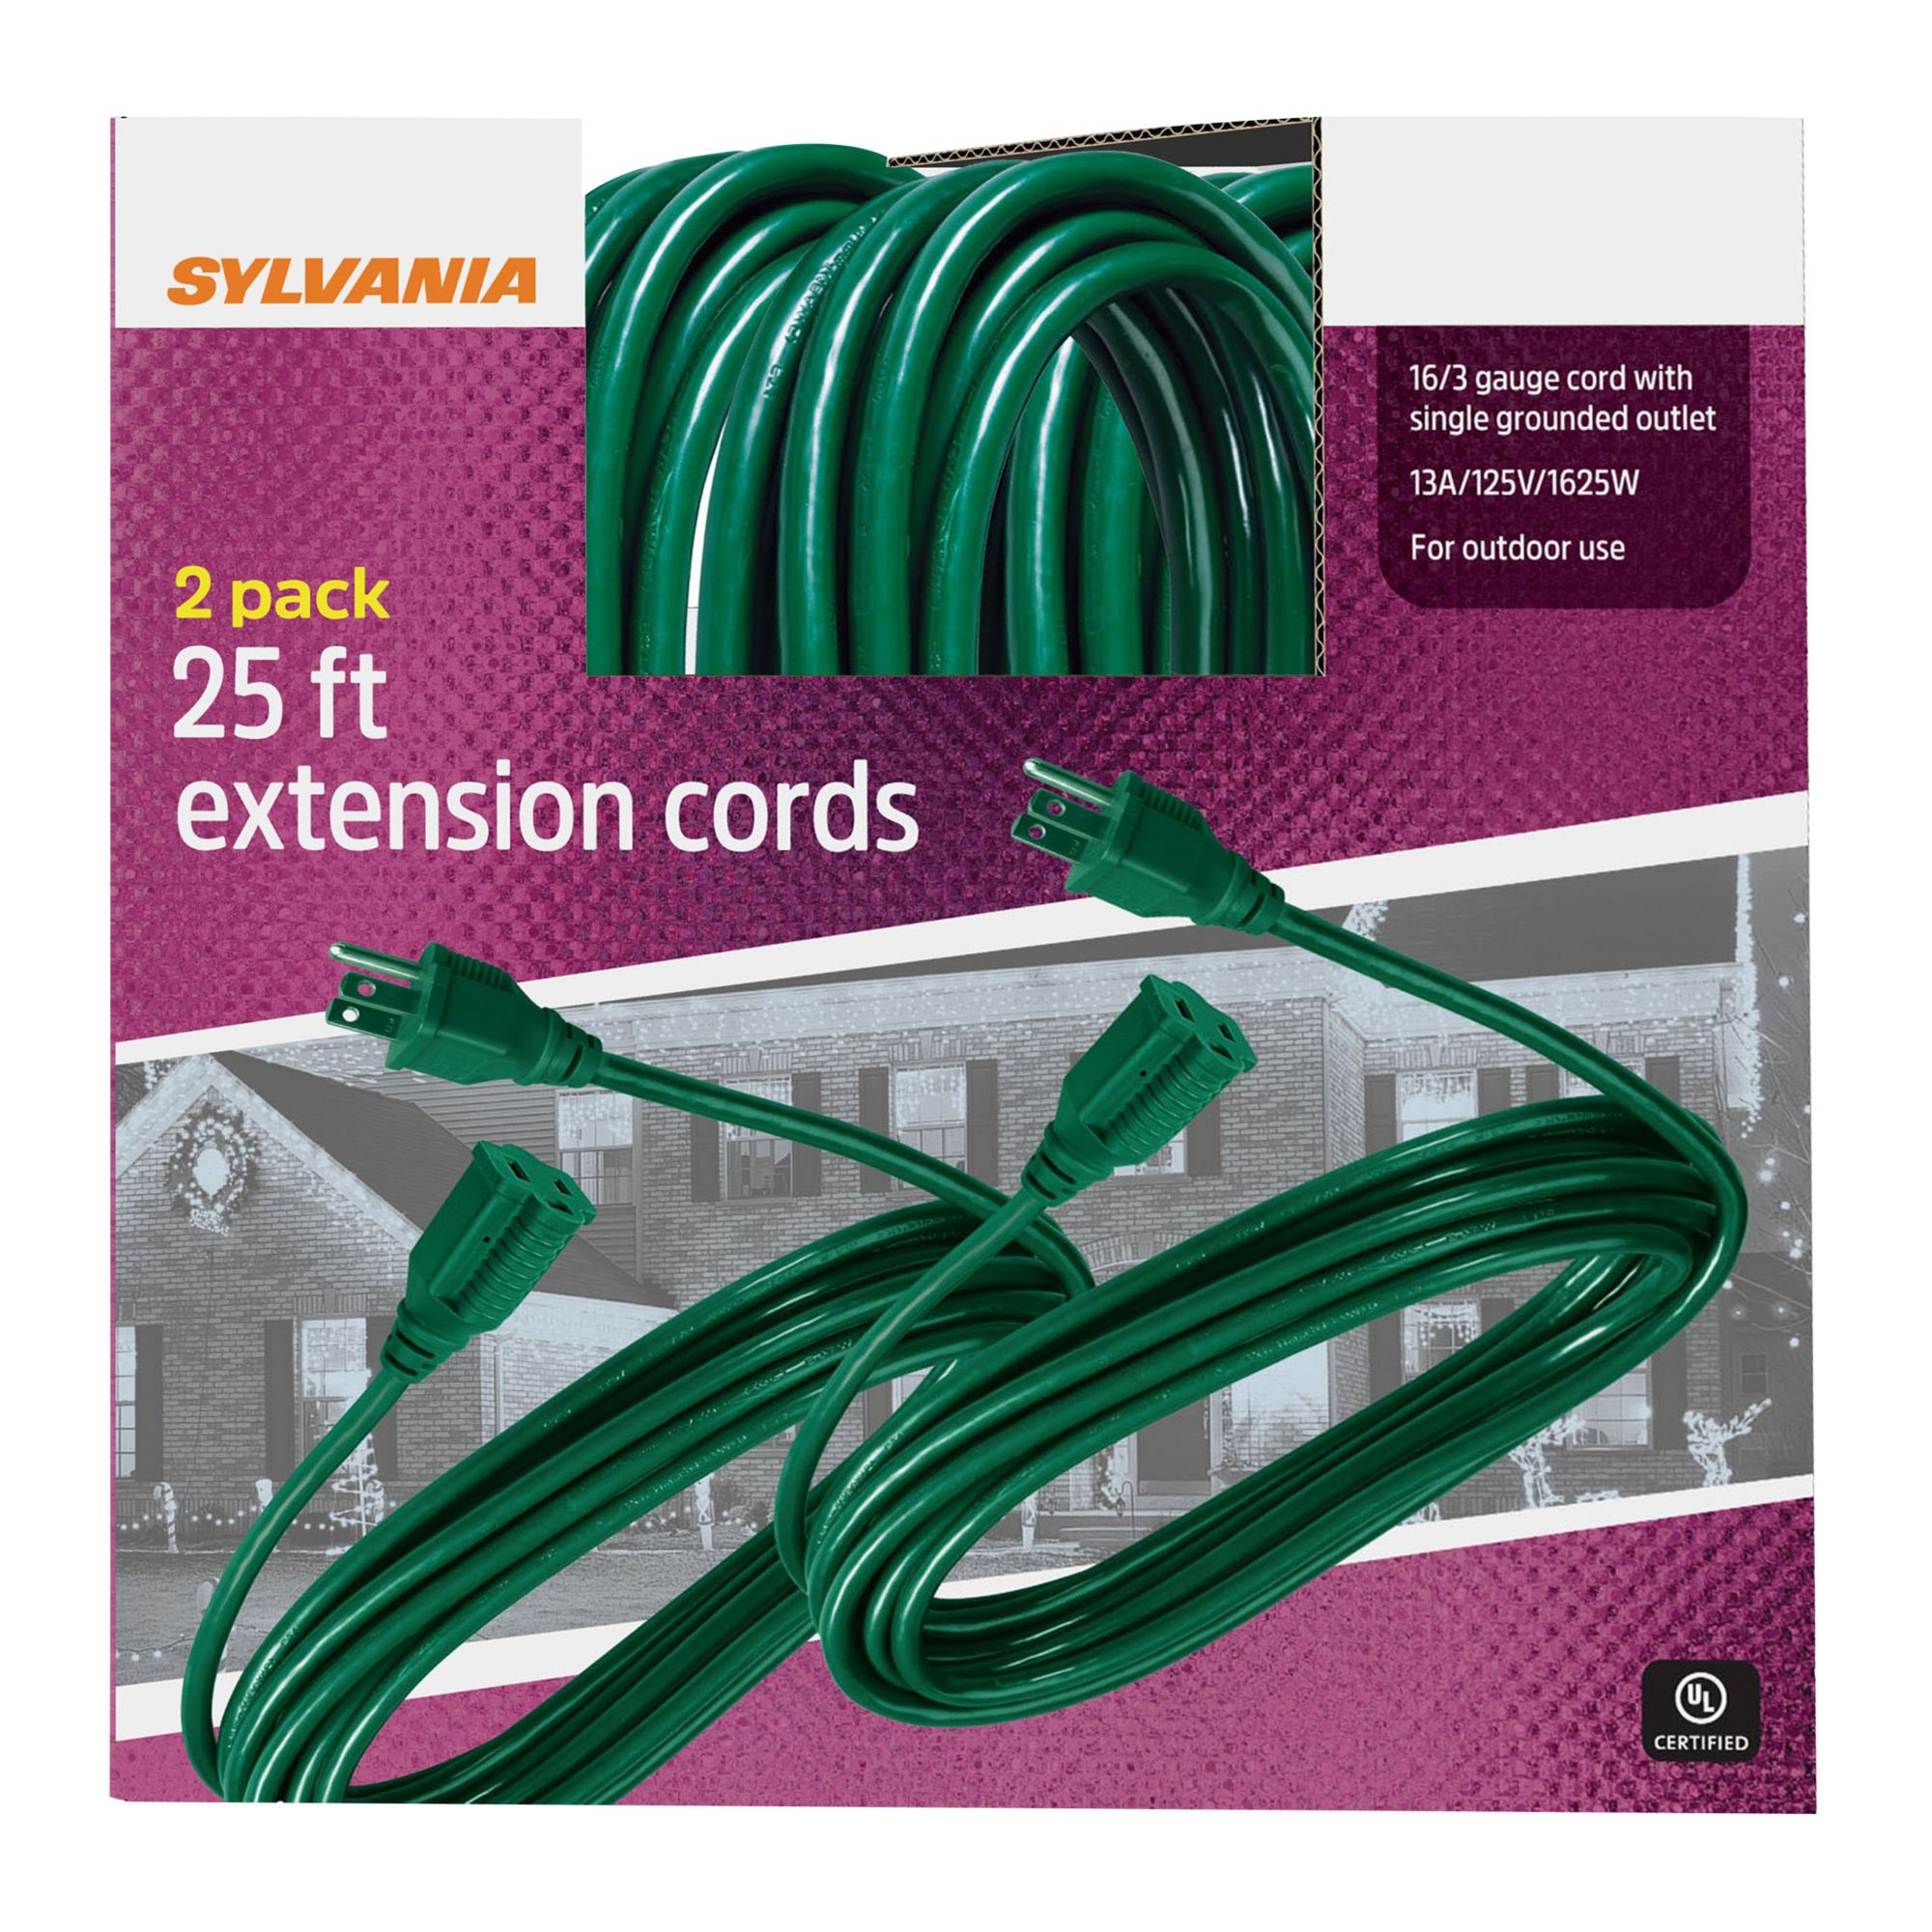 Sylvania 25' Extensions Cords, 2 pk.